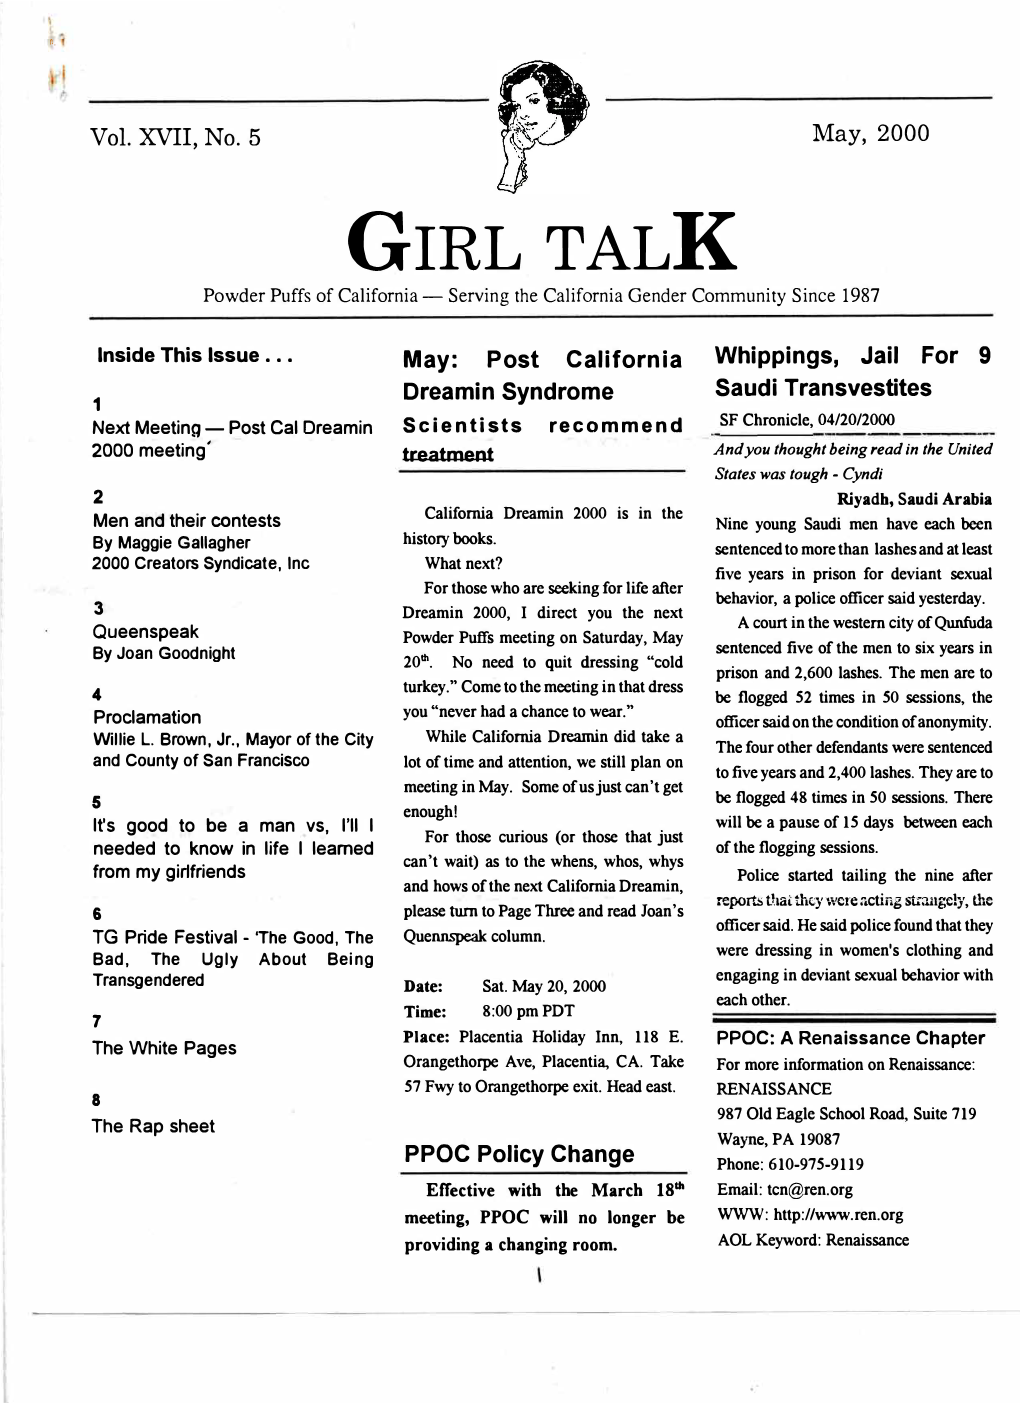 GIRL TALK Powder Puffs of California - Serving the Californiagender Community Since 1987